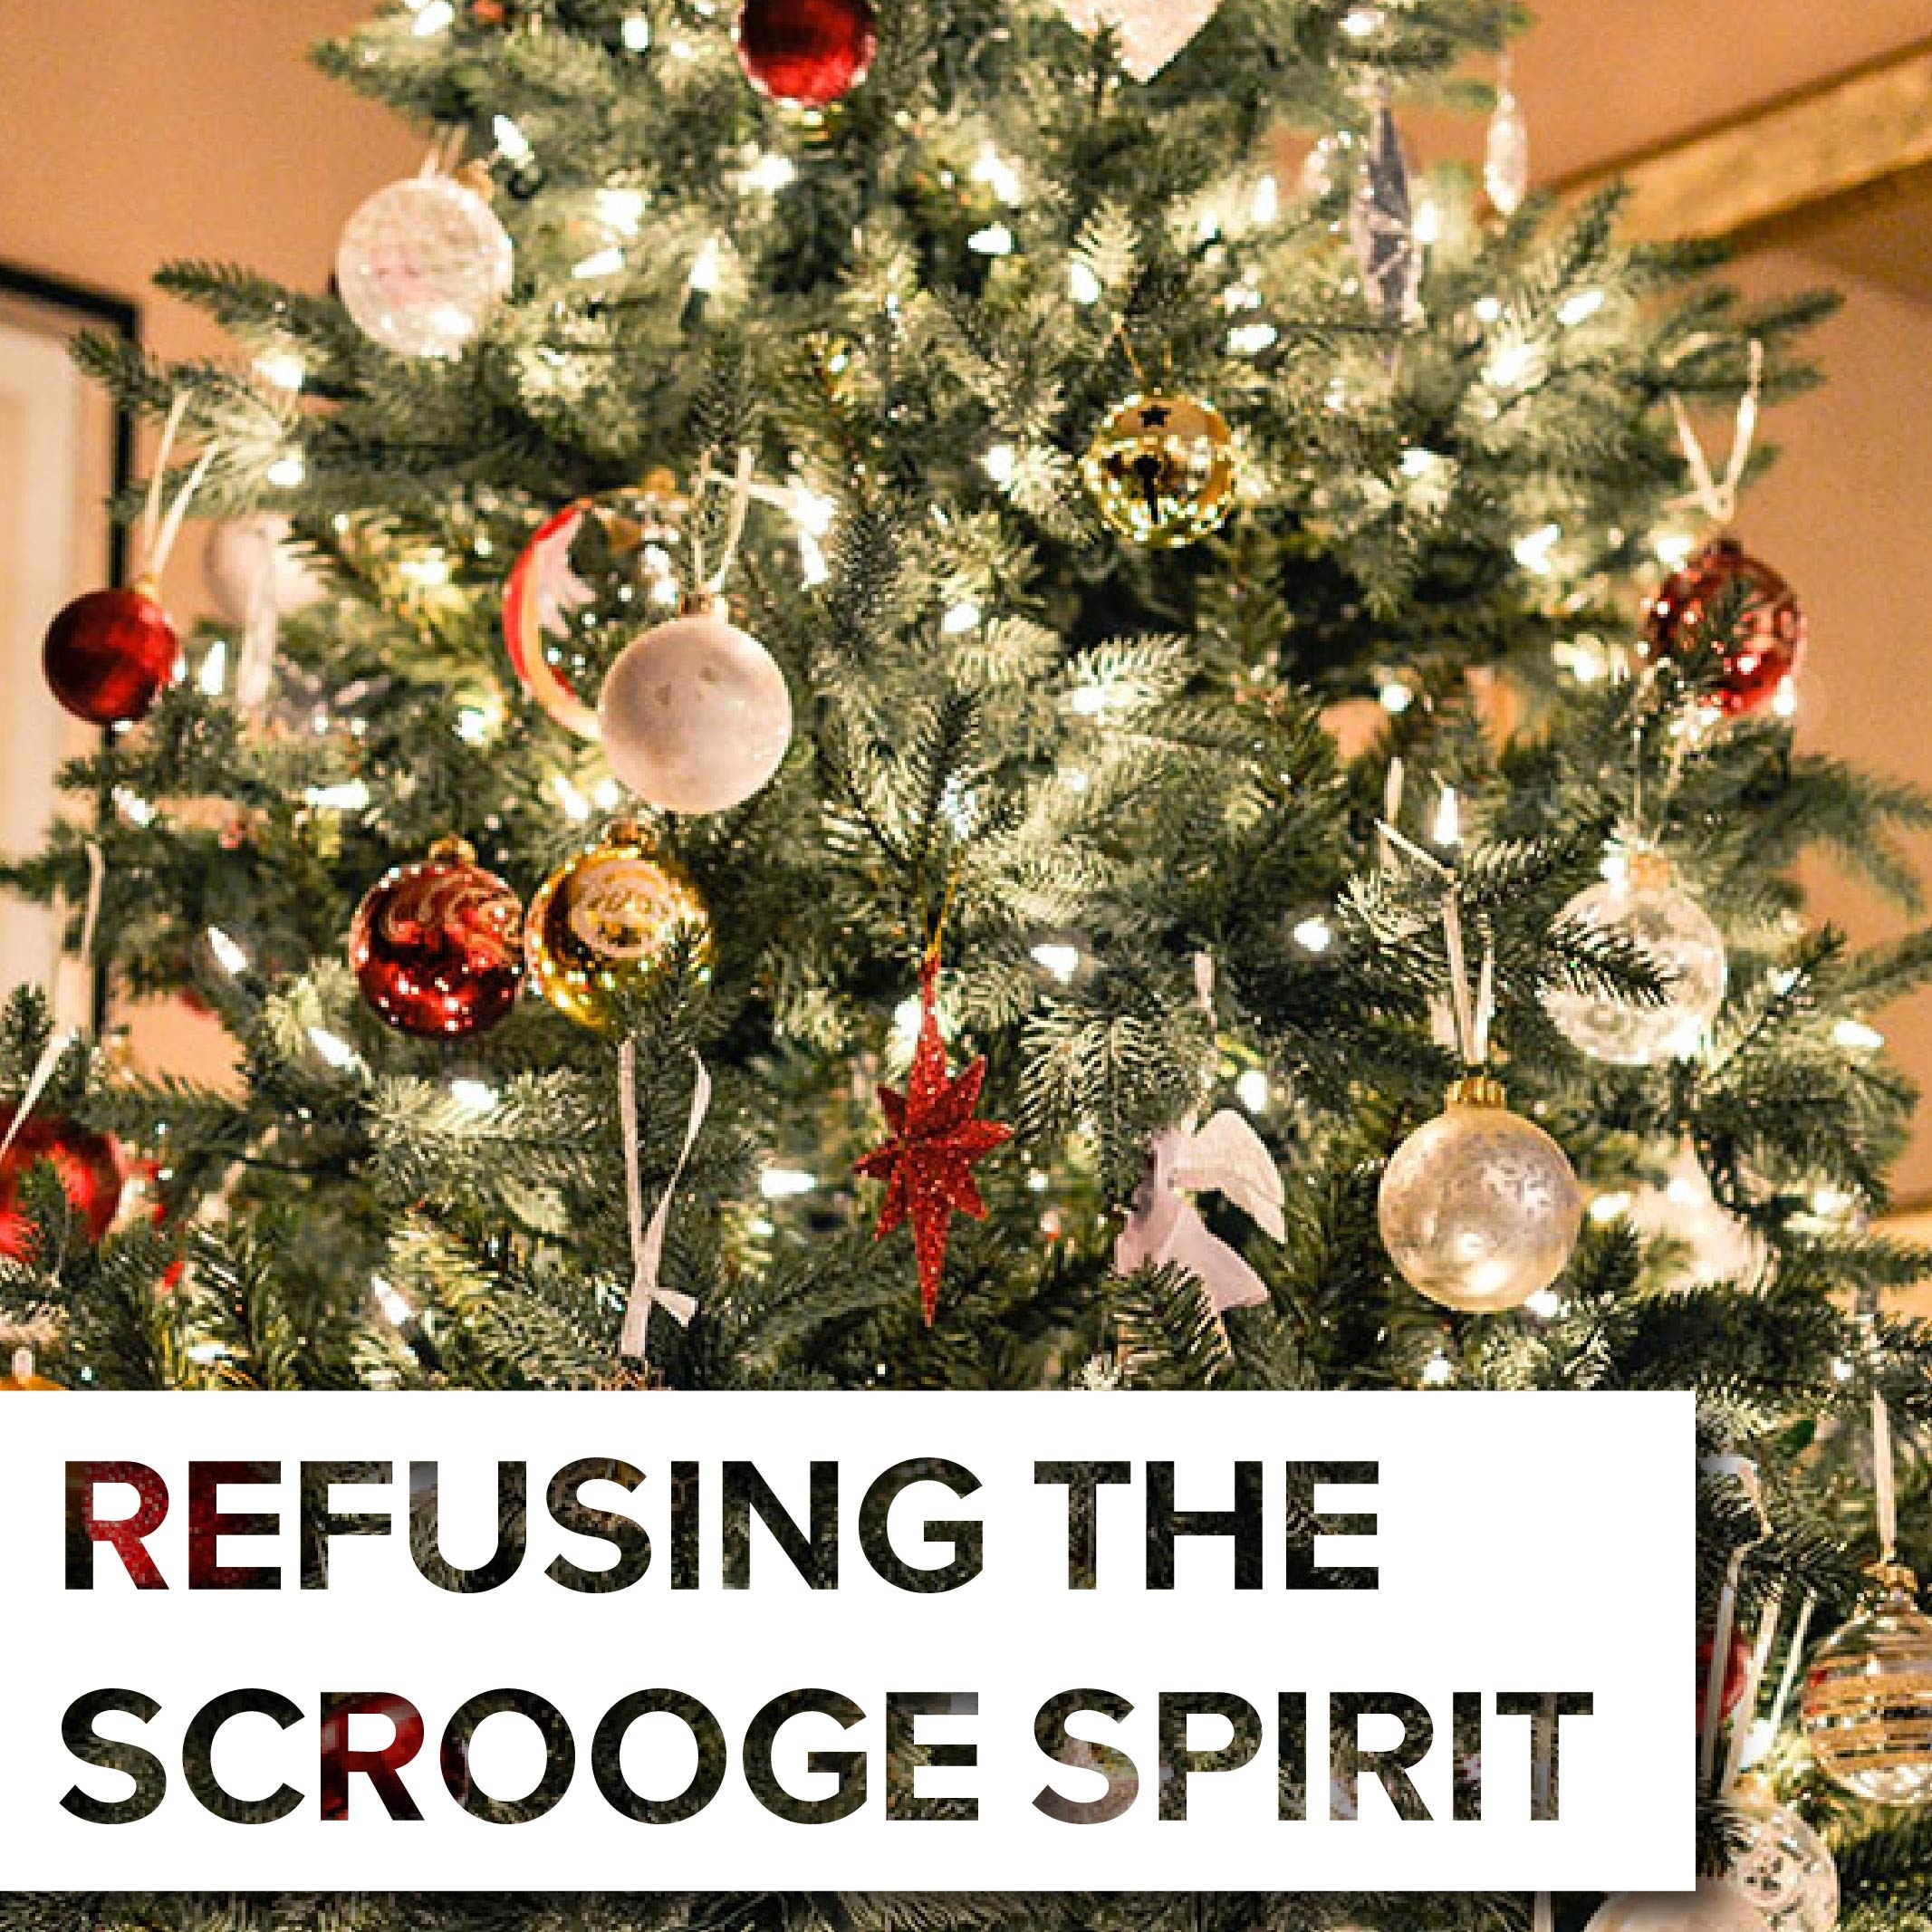 Refusing the Scrooge Spirit